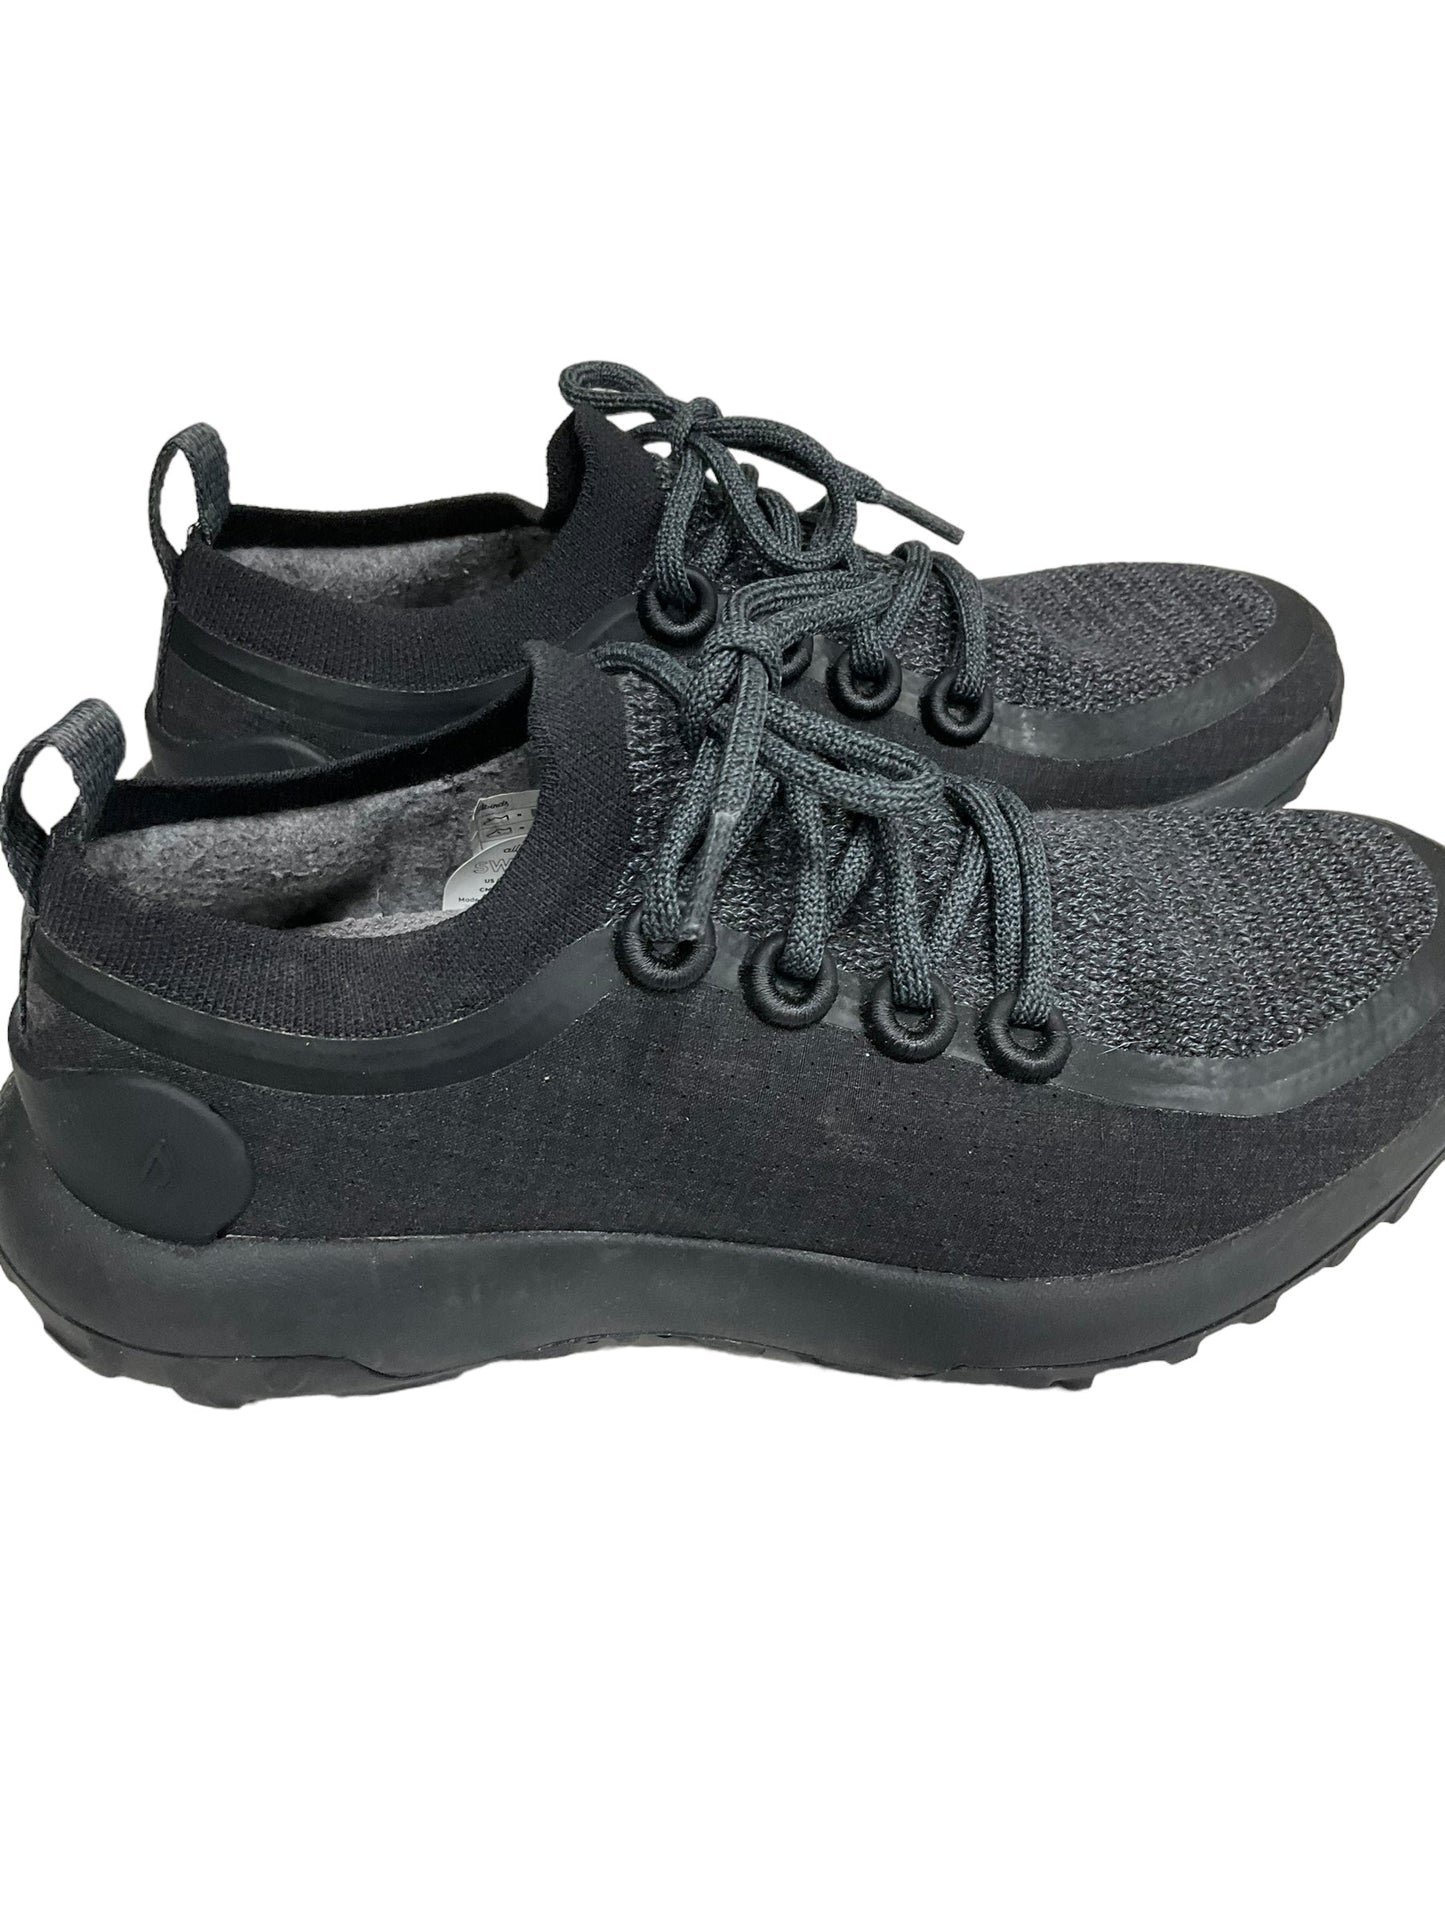 Black Shoes Athletic Allbirds, Size 9